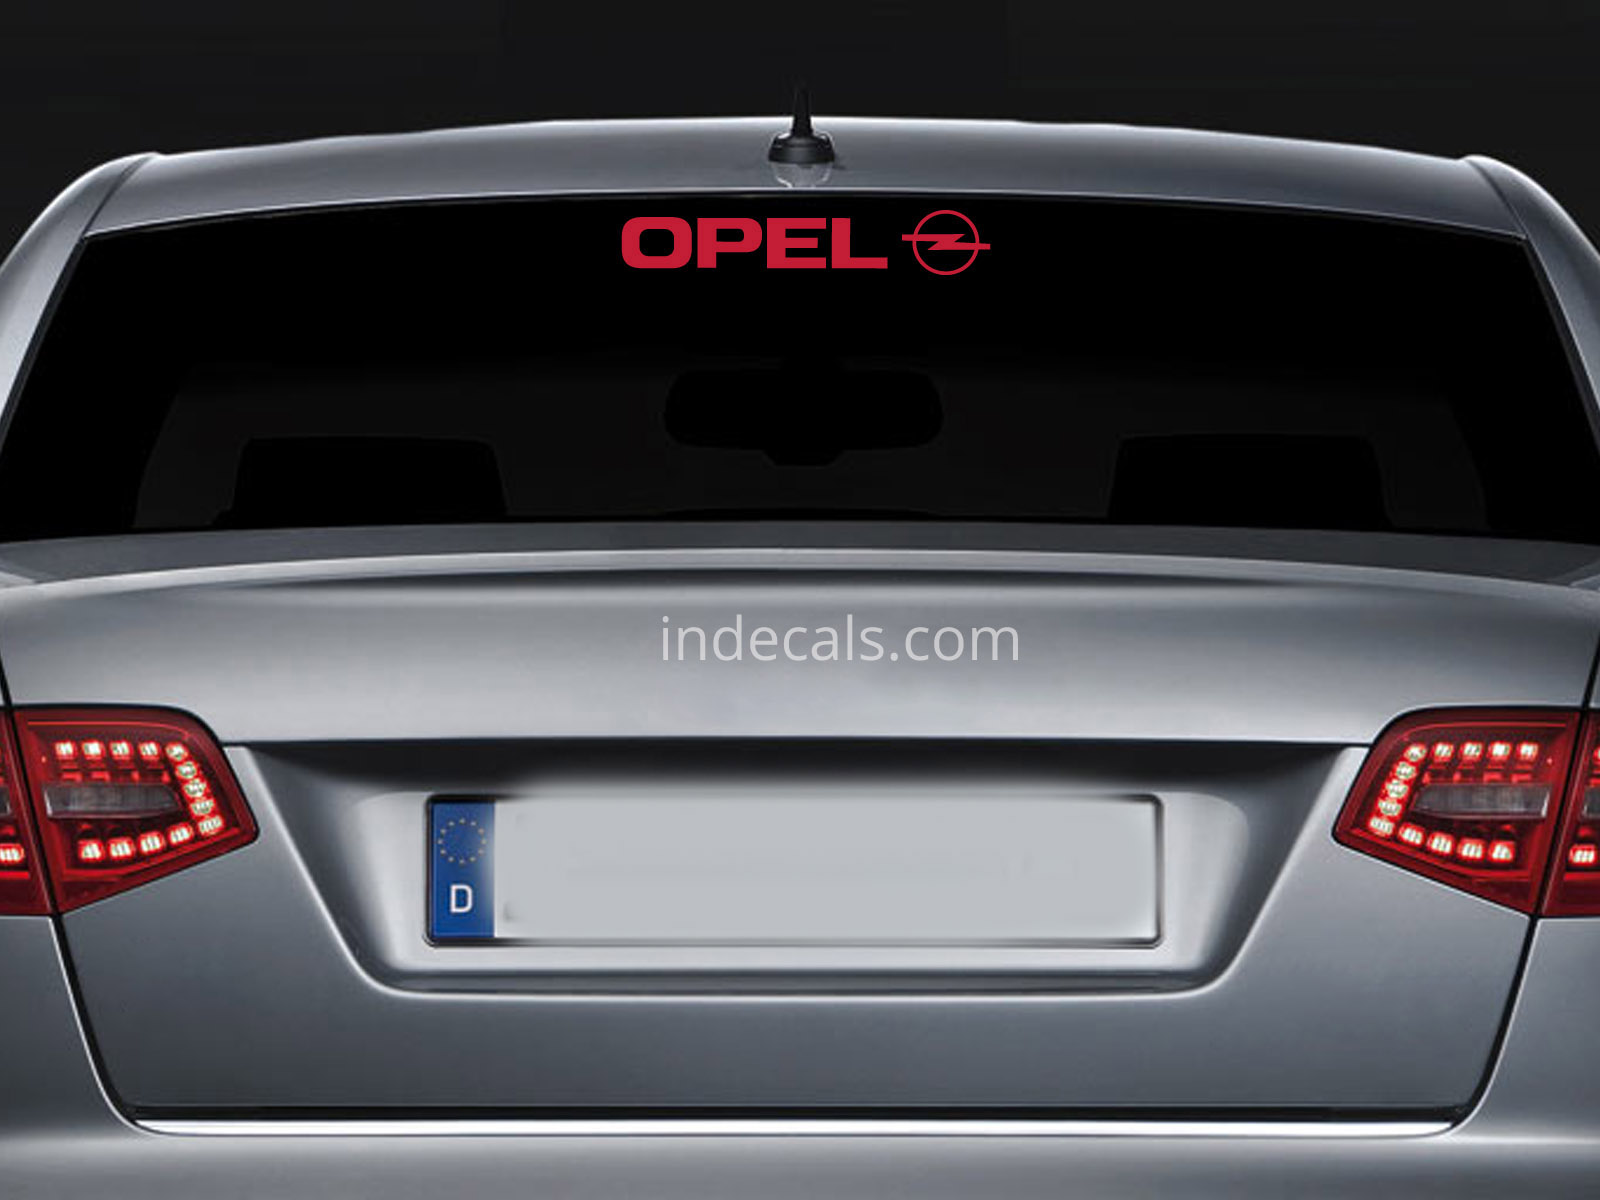 1 x Opel Sticker for Windshield or Back Window - Red